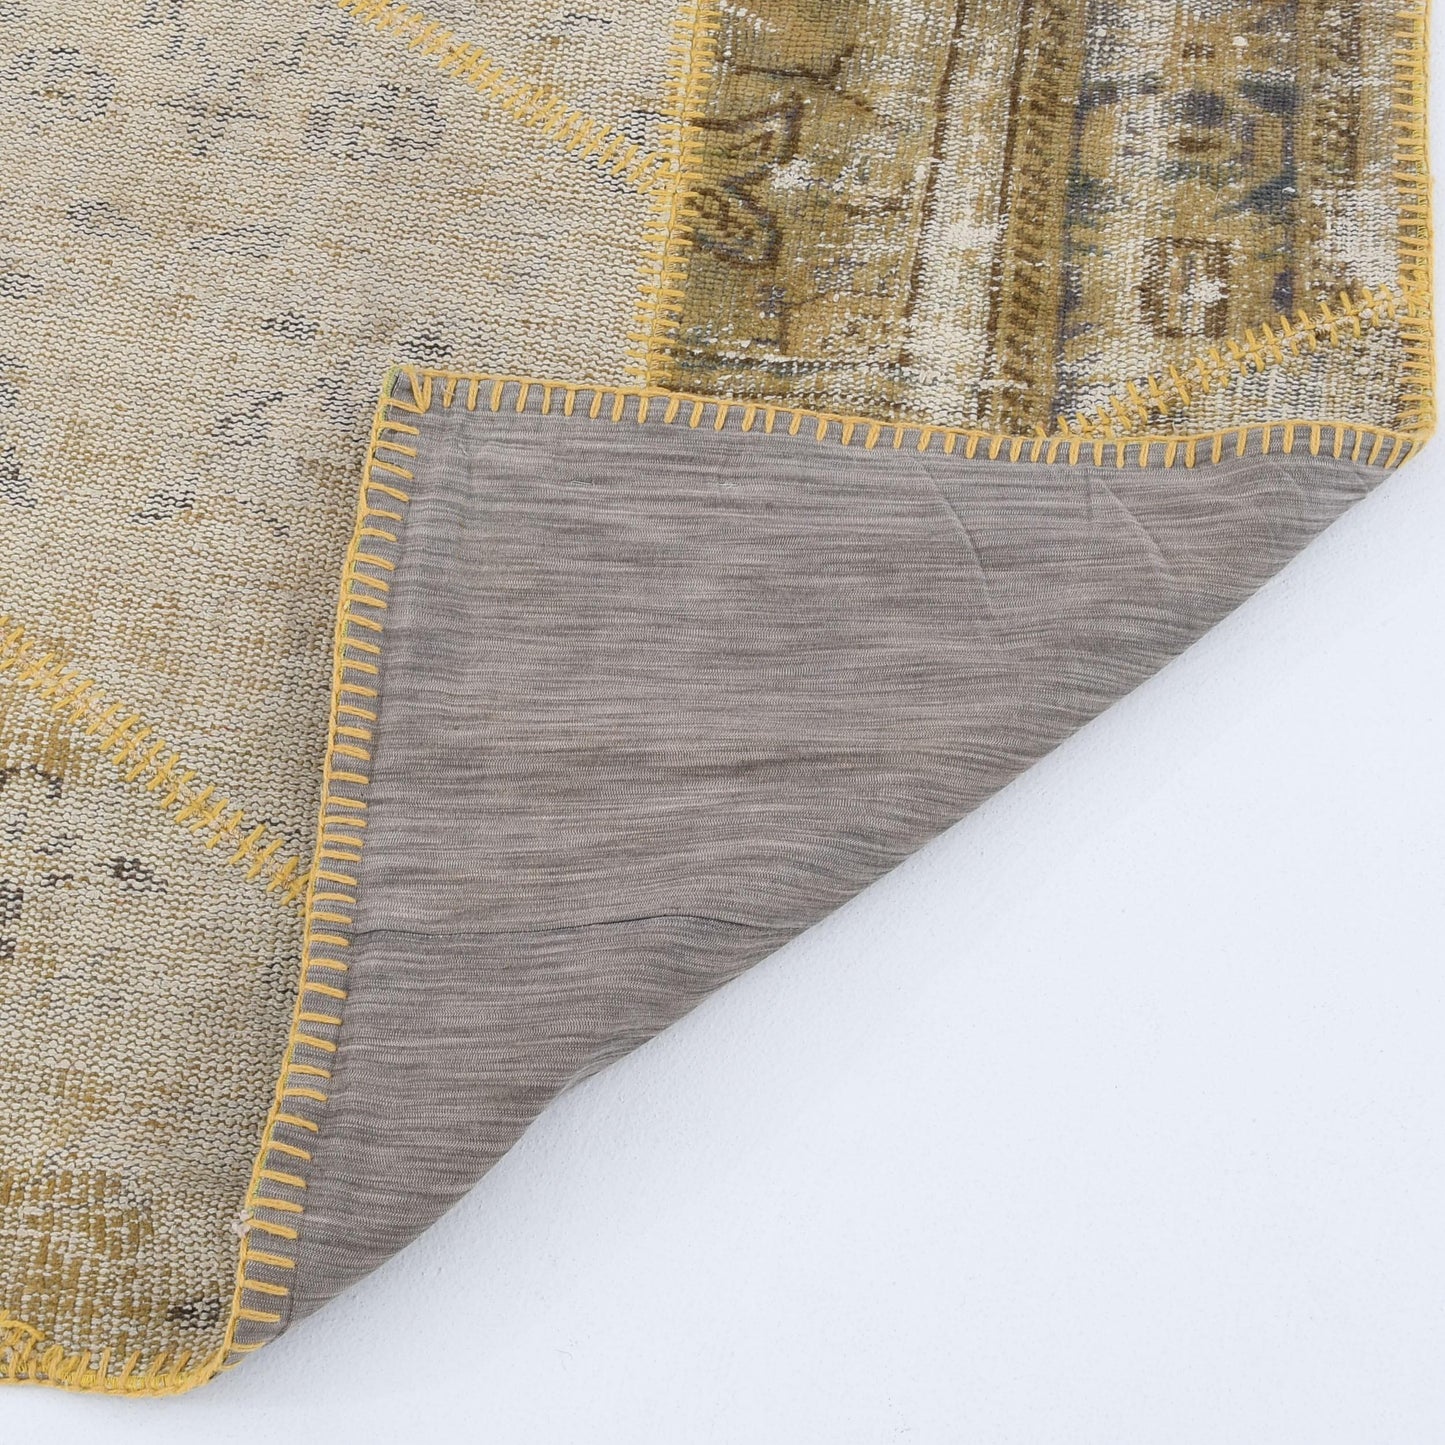 Oriental Turkish Runner Rug Handmade Wool On Wool Patchwork 100 x 388 Cm - 3' 4'' x 12' 9'' Yellow C006